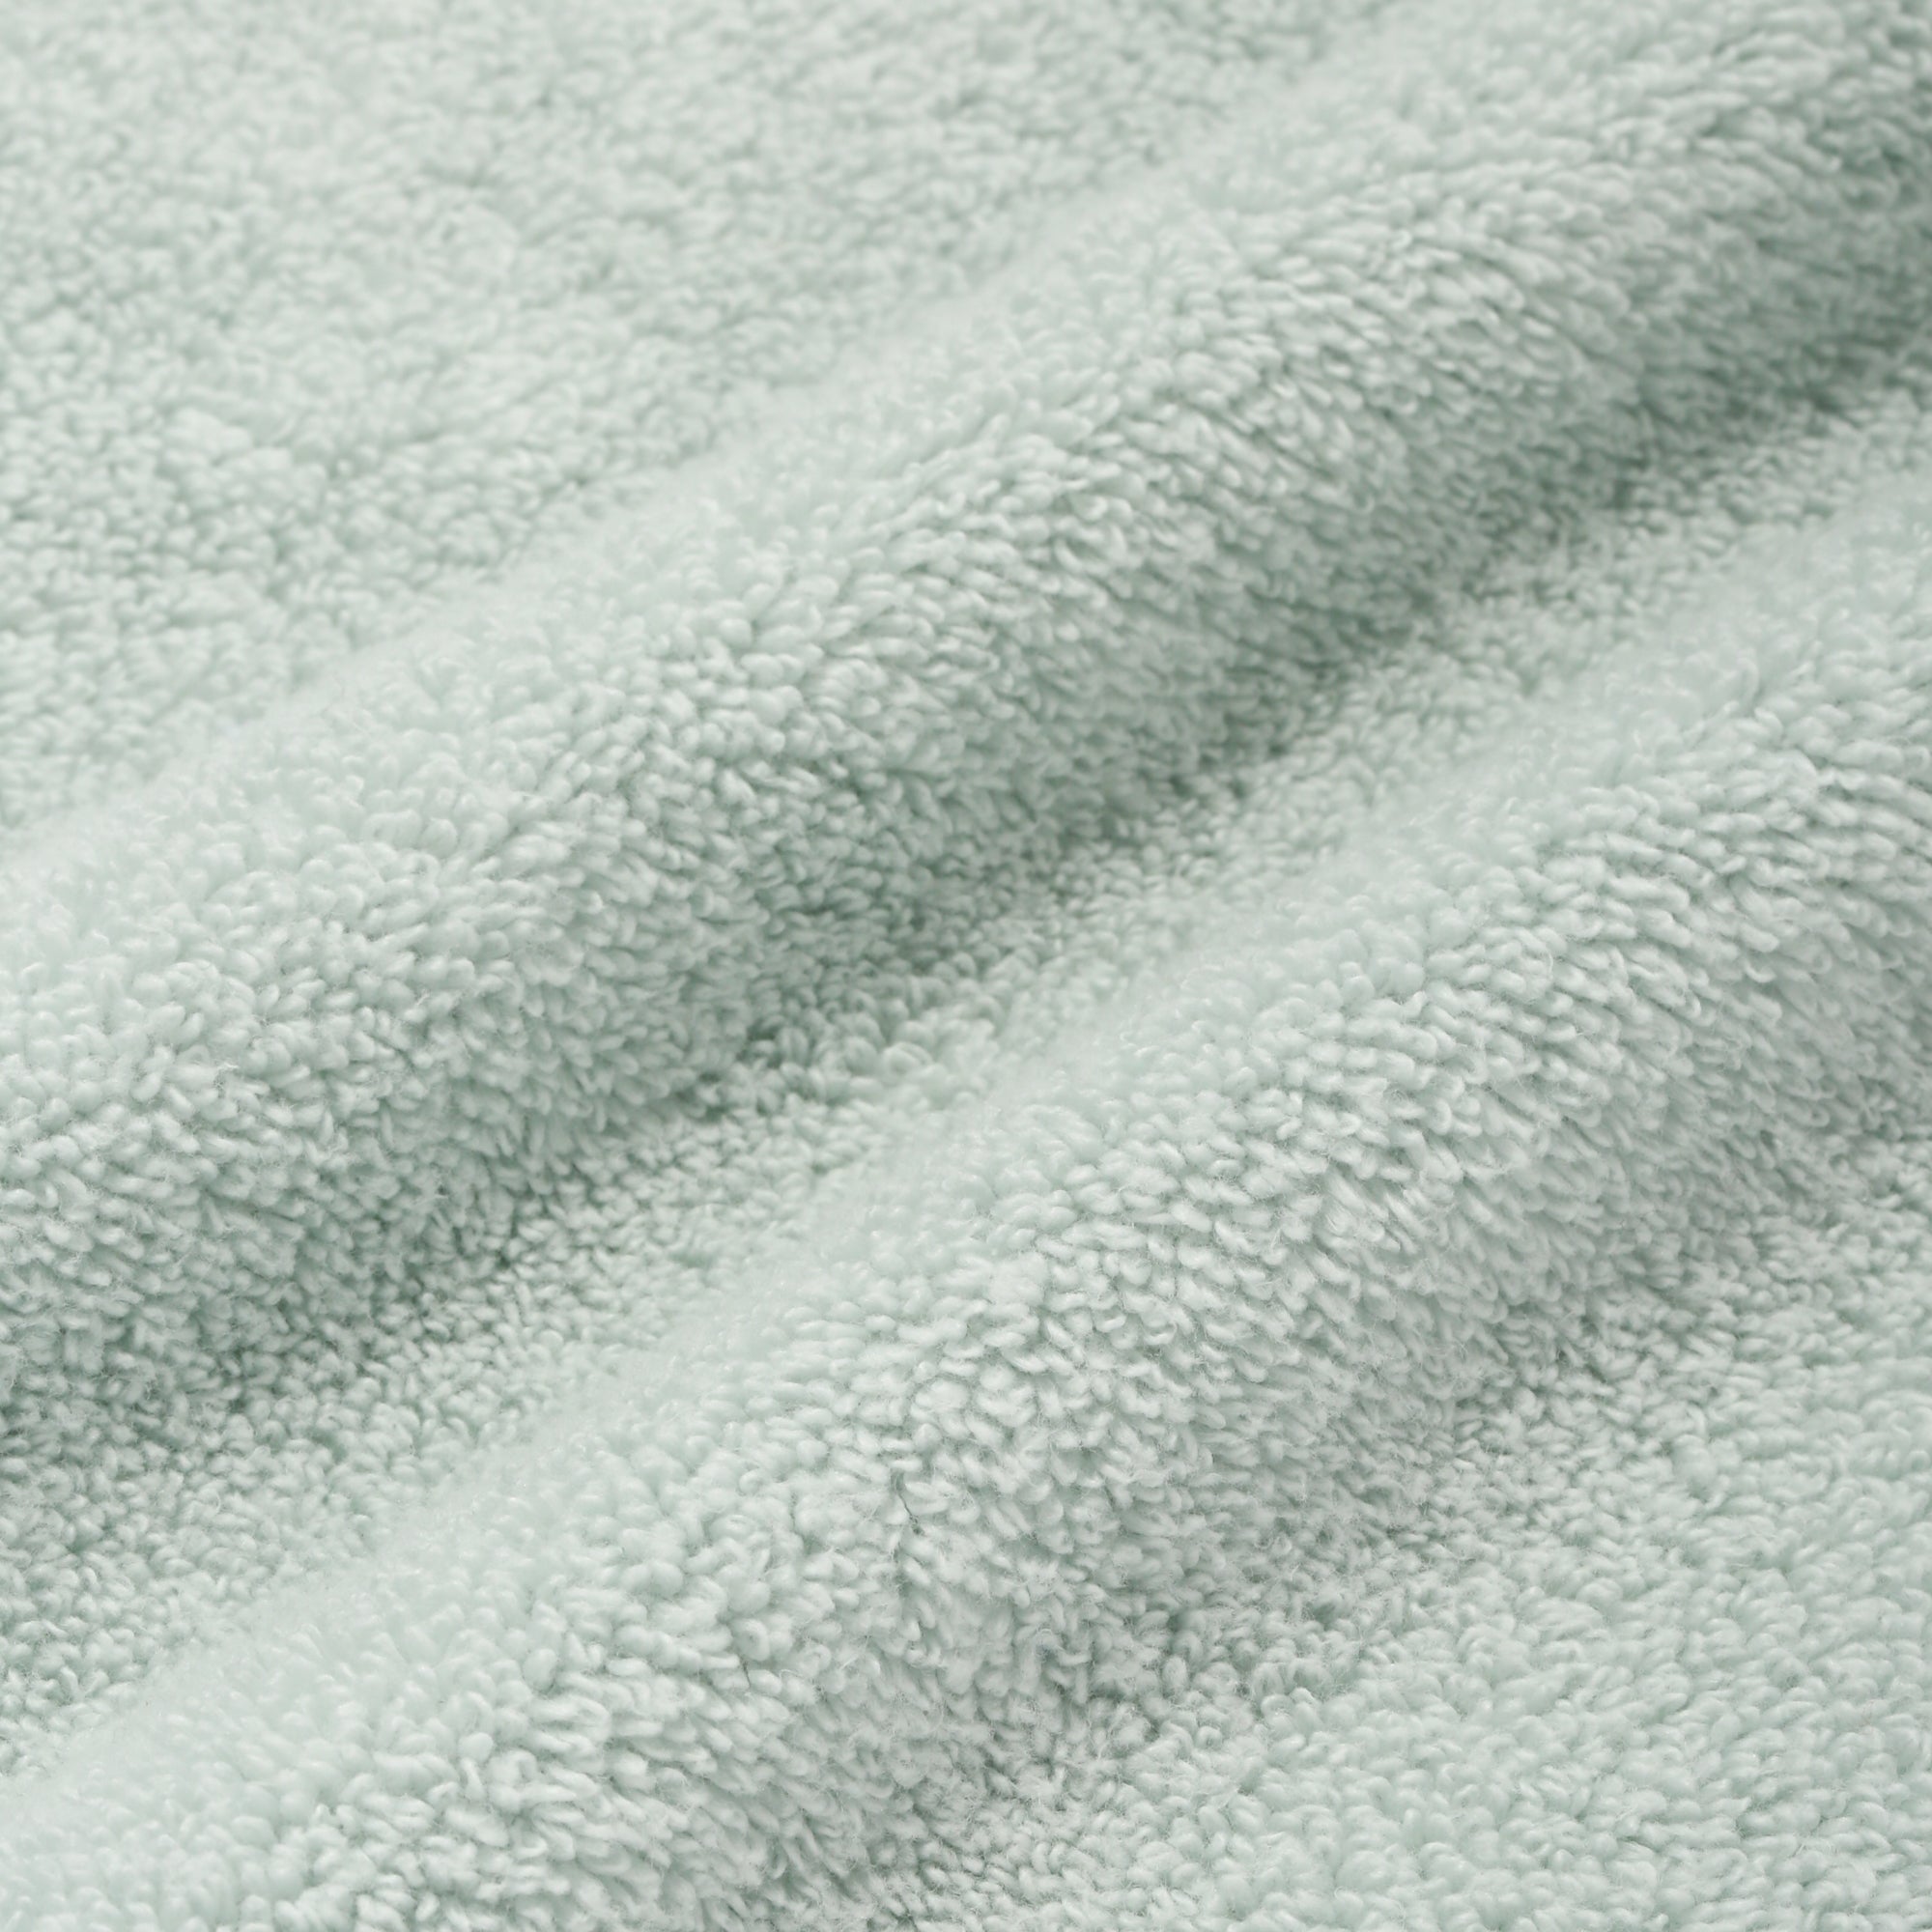 FUWASARA BATH FACE TOWEL 3P SET GREEN